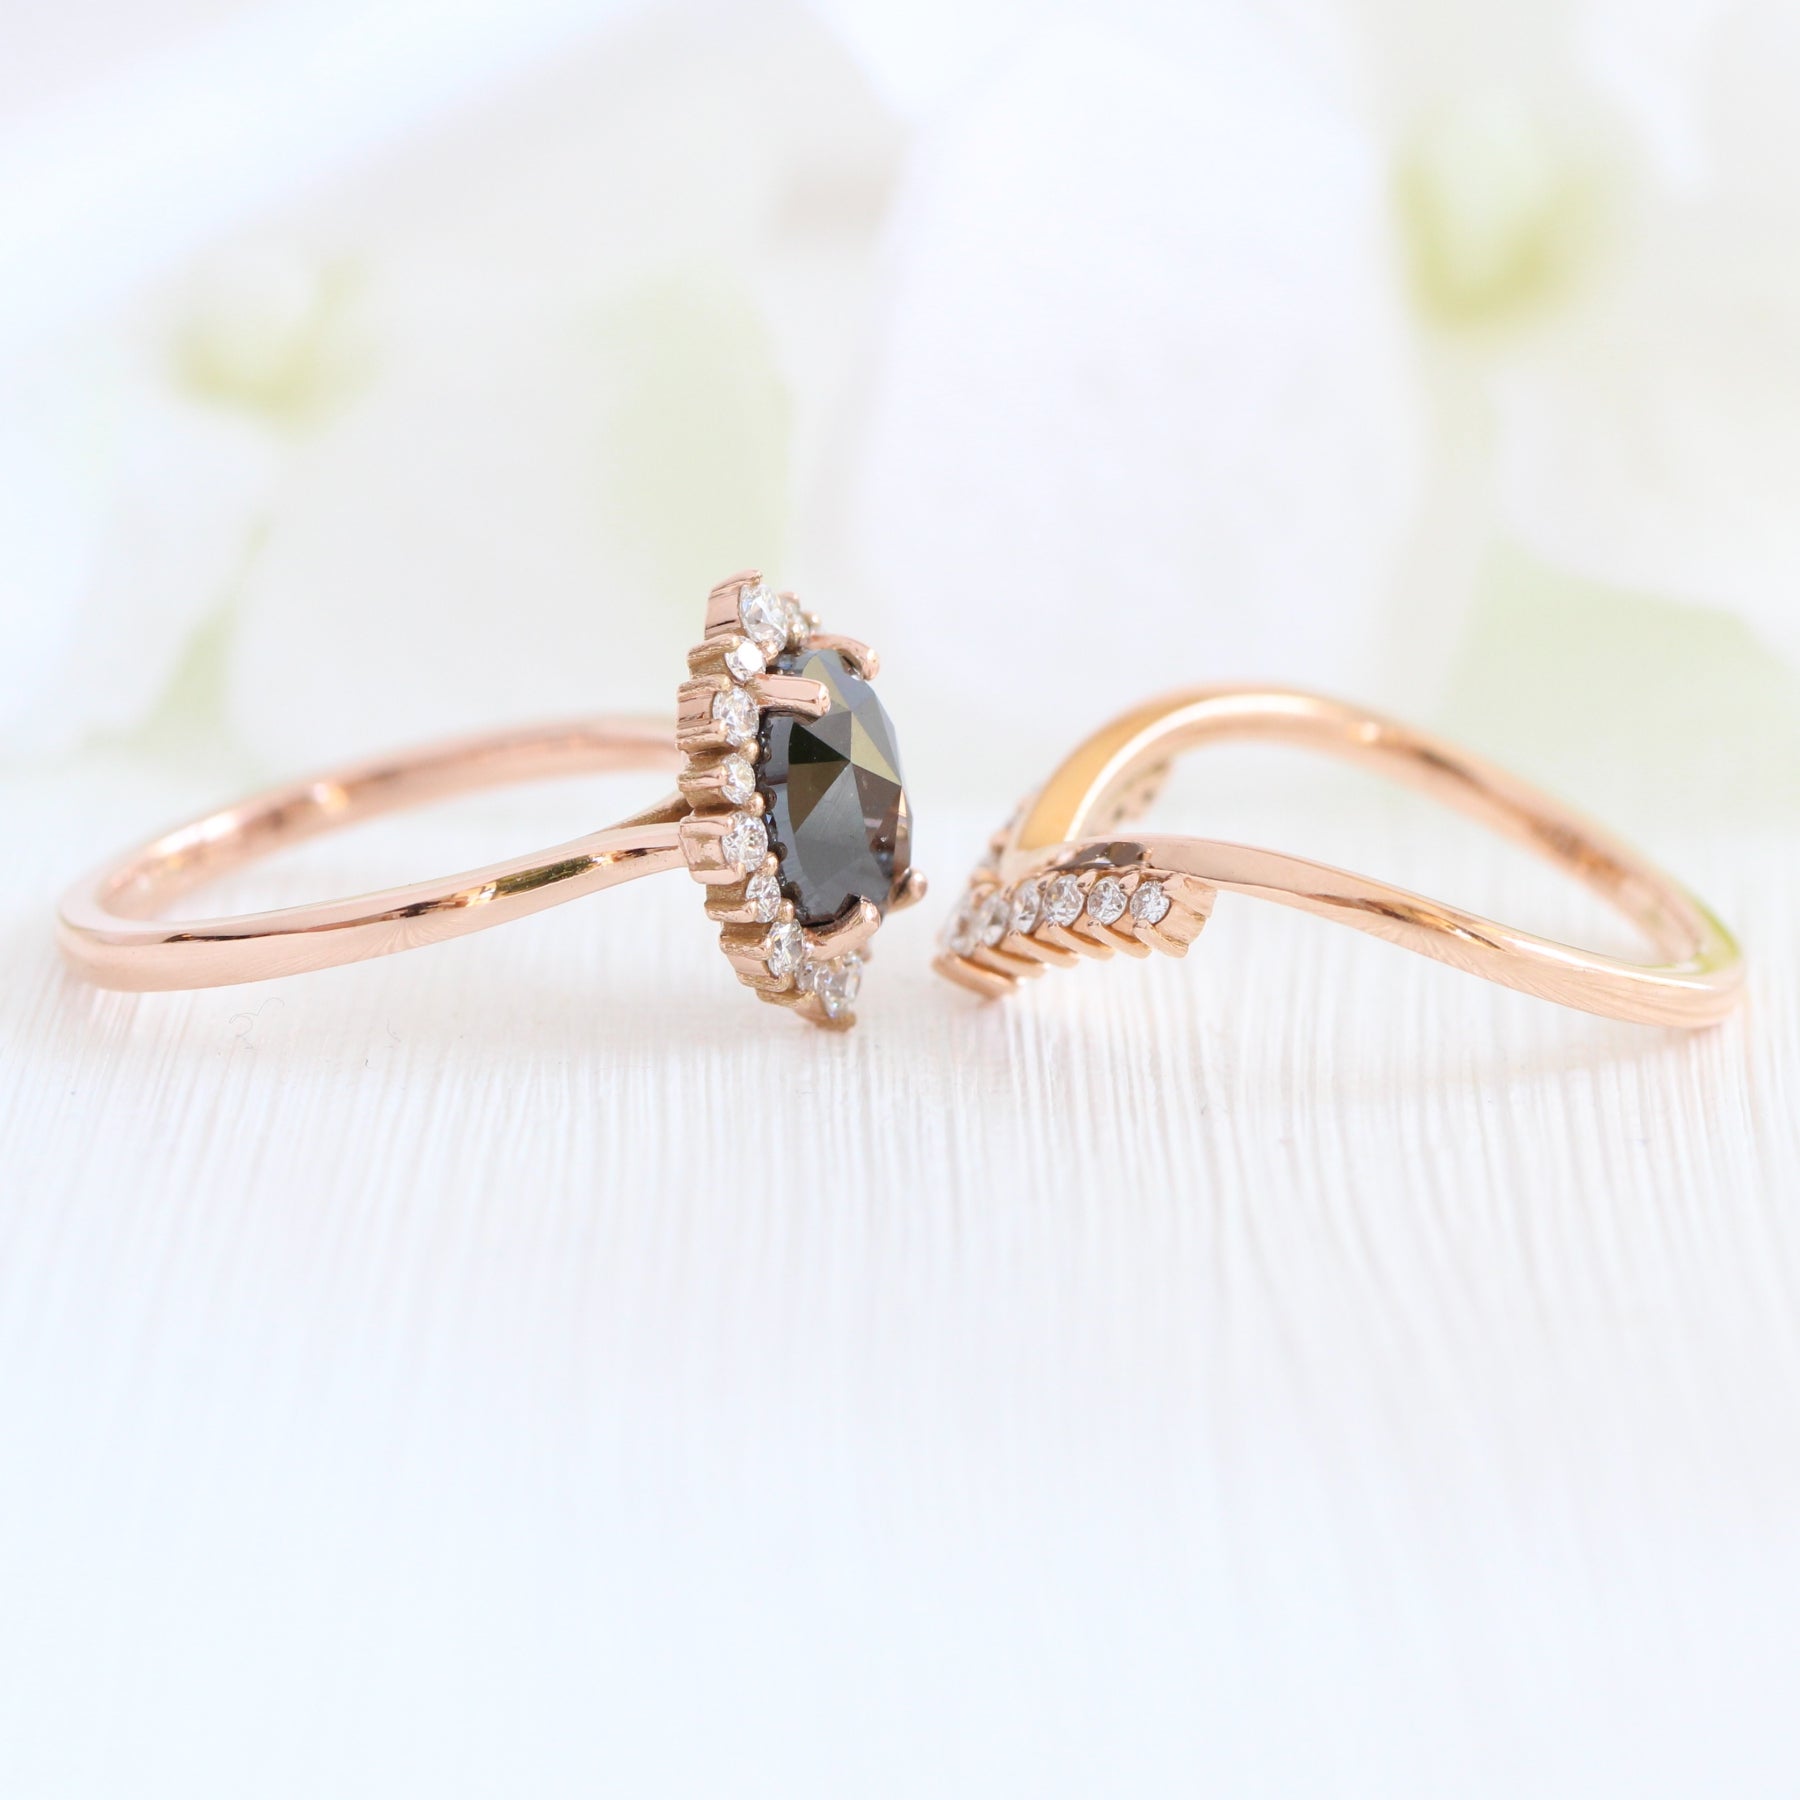 Oval rose cut black diamond ring rose gold and v shaped diamond wedding set by la more design